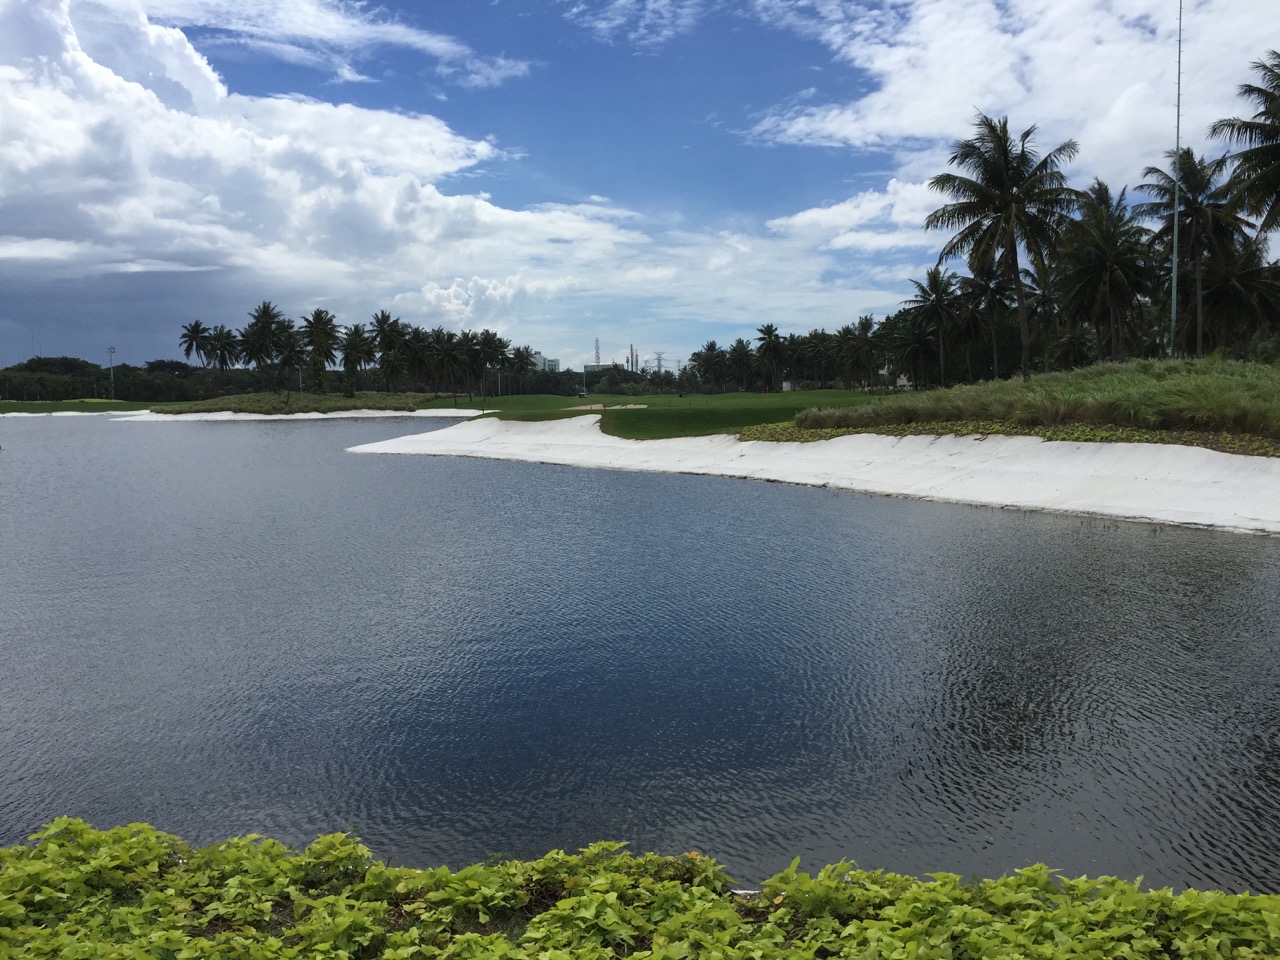 Damai Indah Golf ( PIK ) course- the edges of the lake are concrete, not sand!